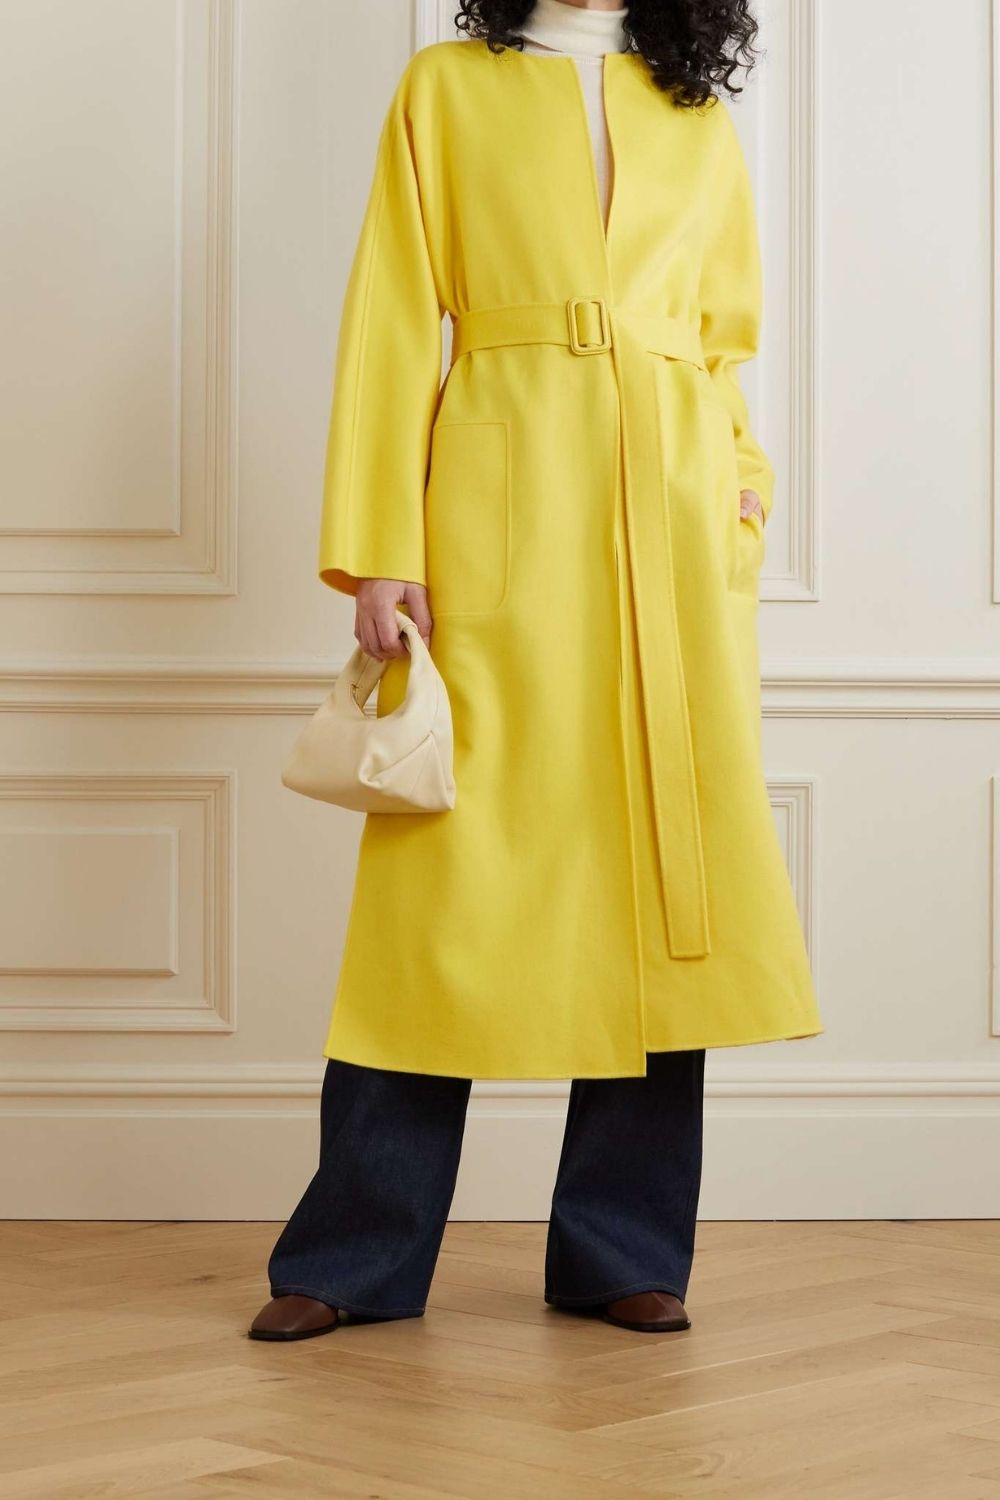 The-Gloss-Magazine-shop-yellow-coats-2